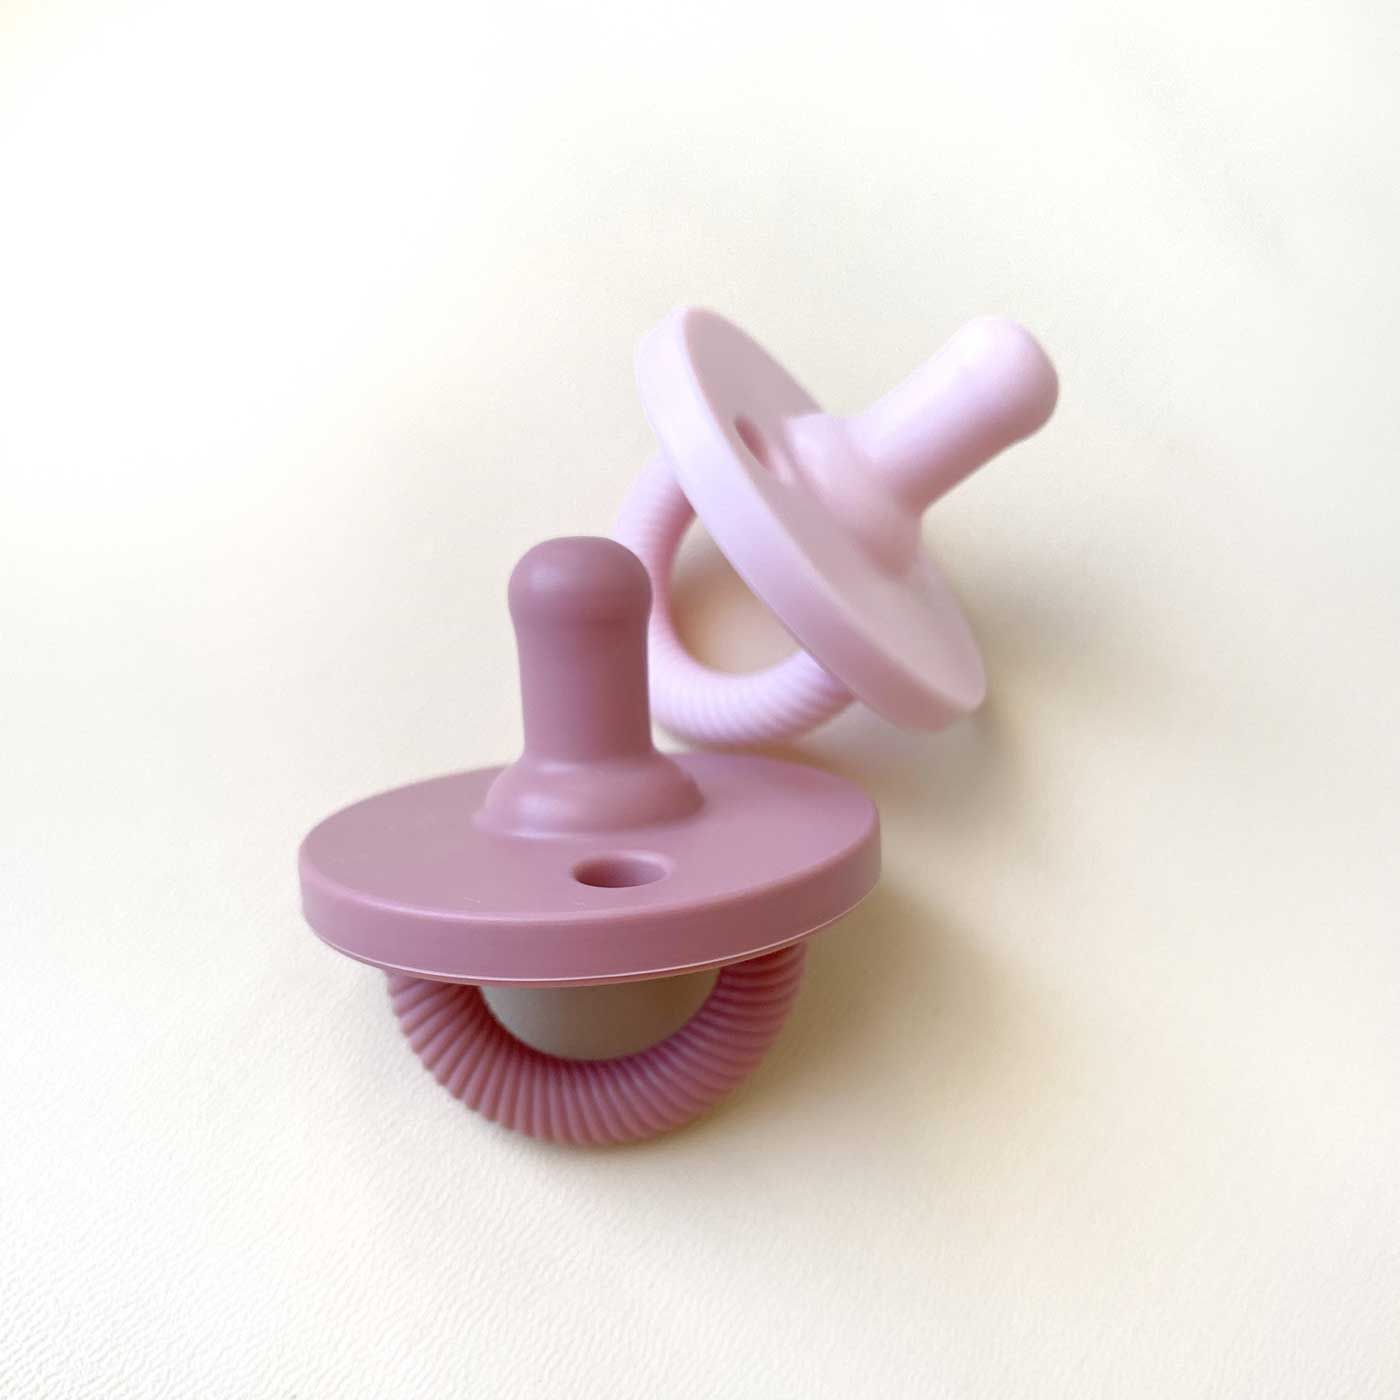 Brightchewelry Silicone Pacifer - Pink - 1